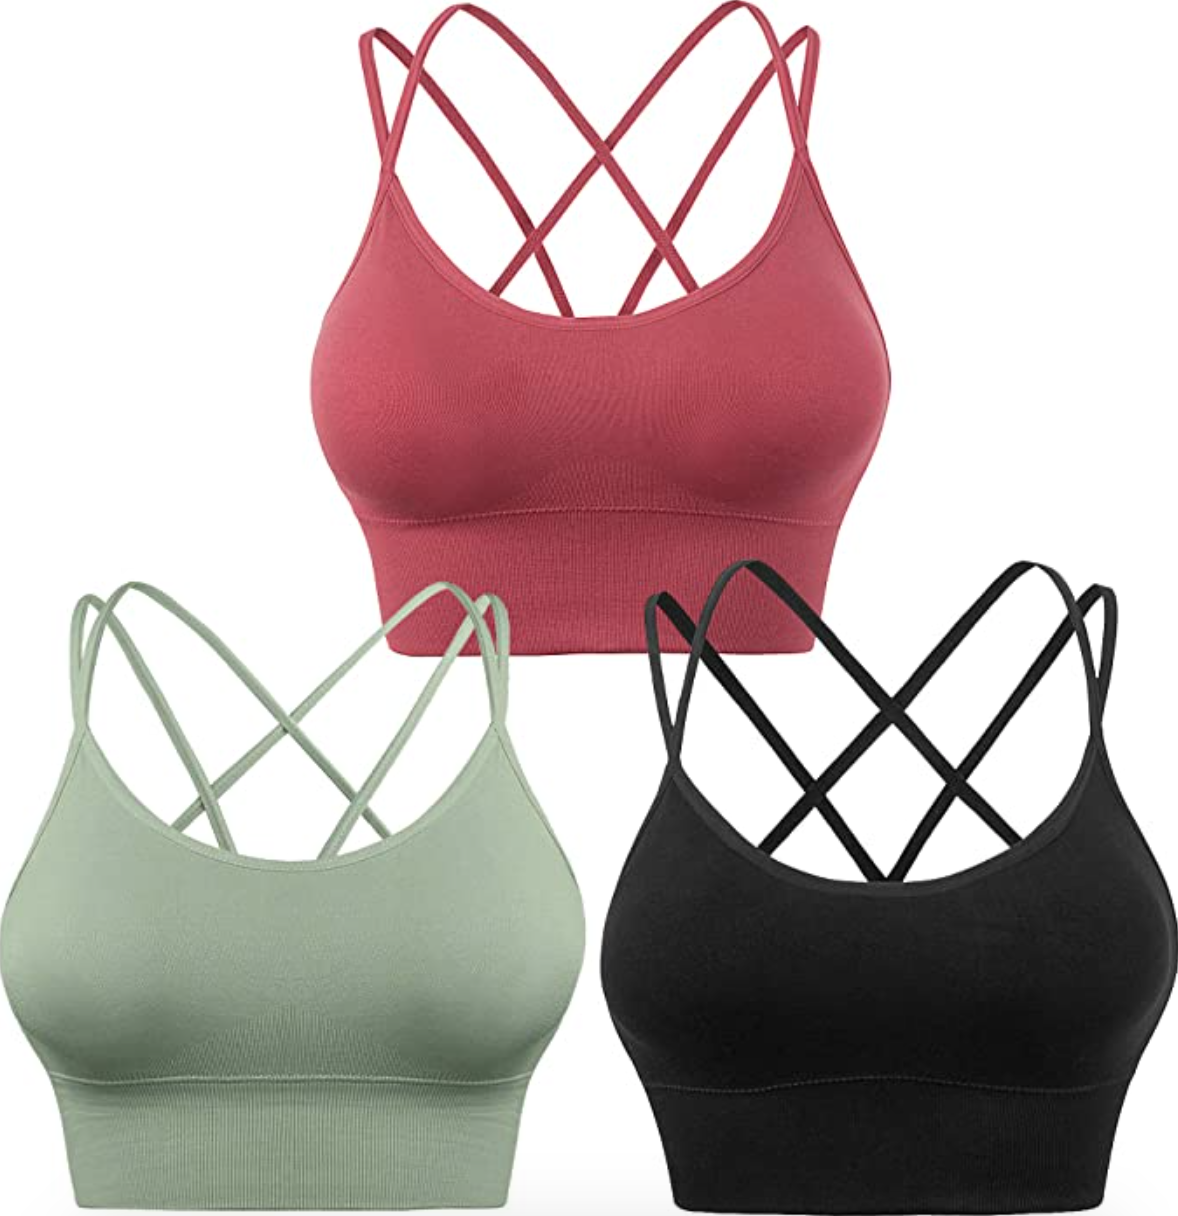 Evercute cross-back sports bras: $25 and up 